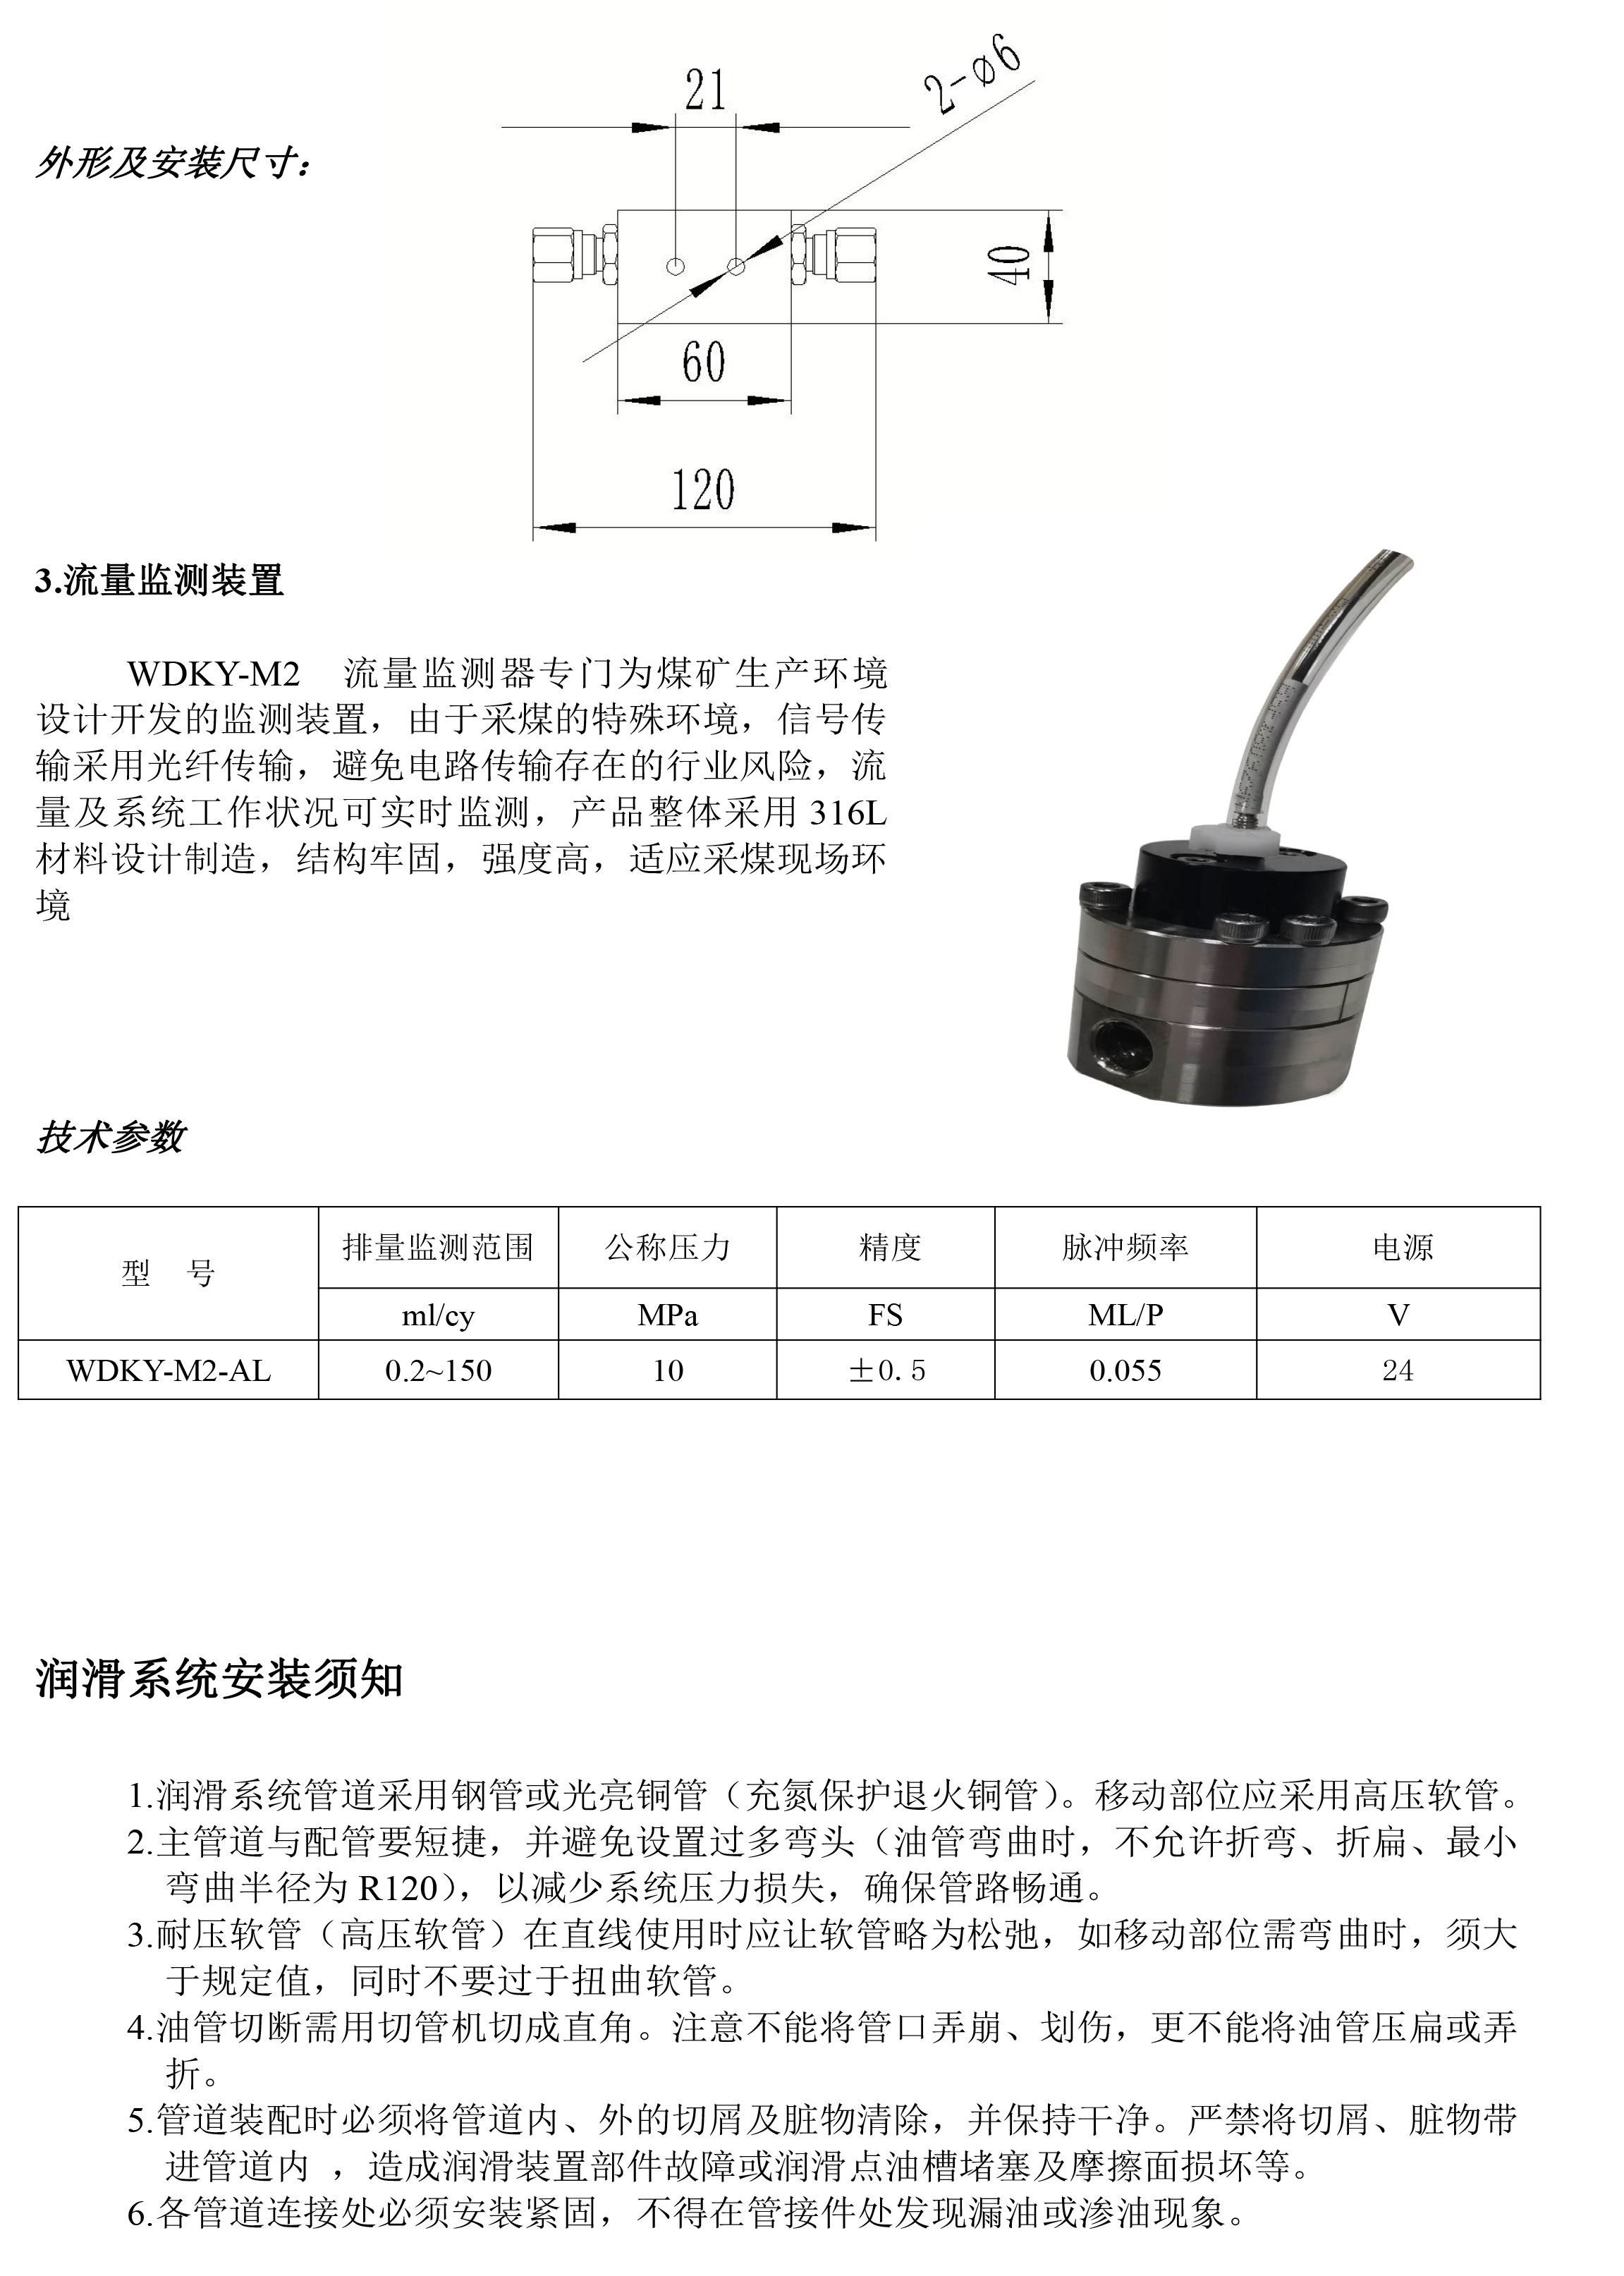 RHX-I3 矿用液压动力润滑装置